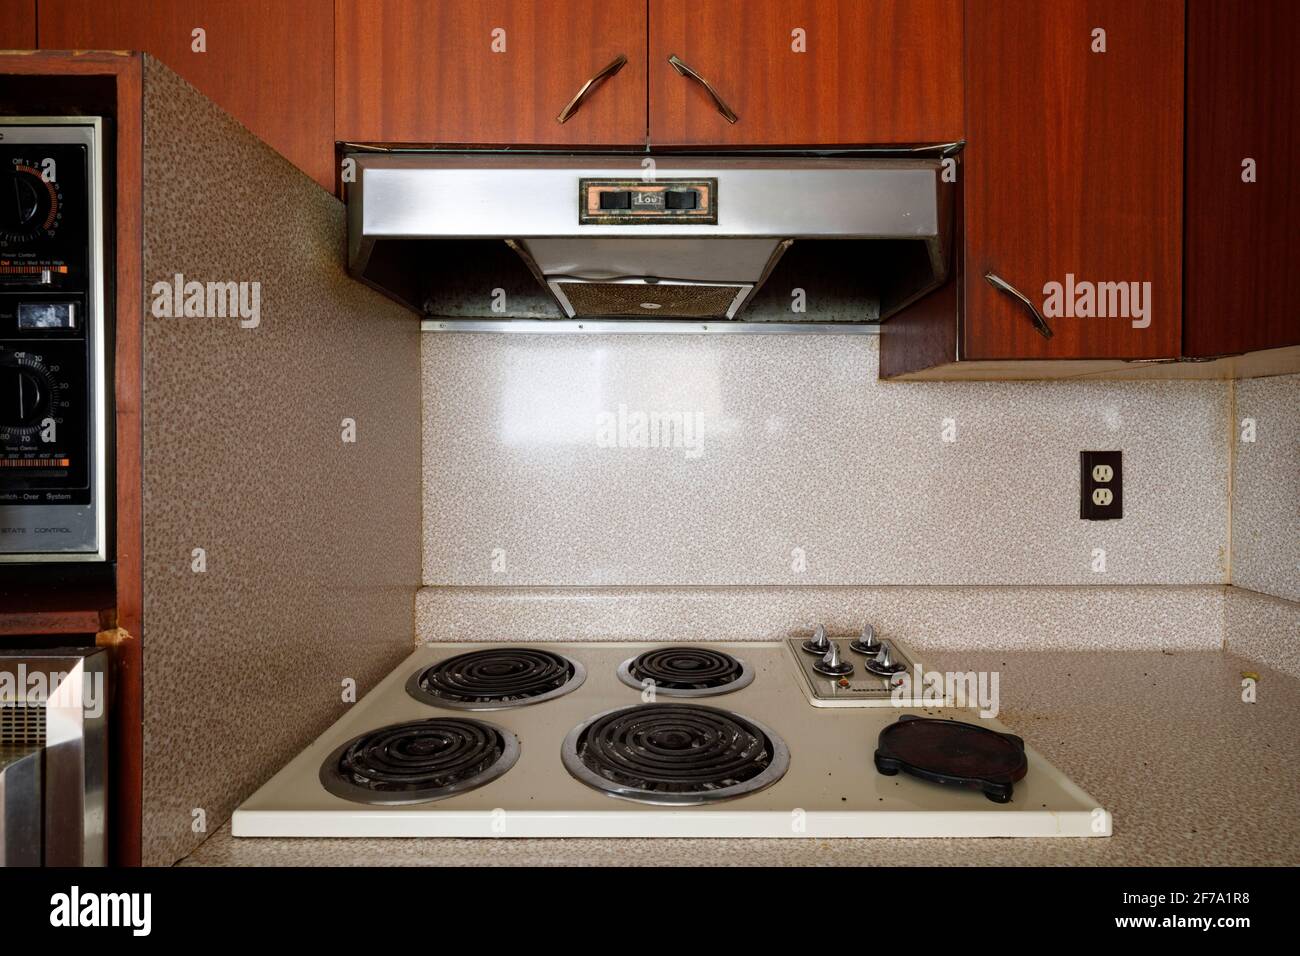 Placa de cocina empotrada fotografías e imágenes de alta resolución - Alamy